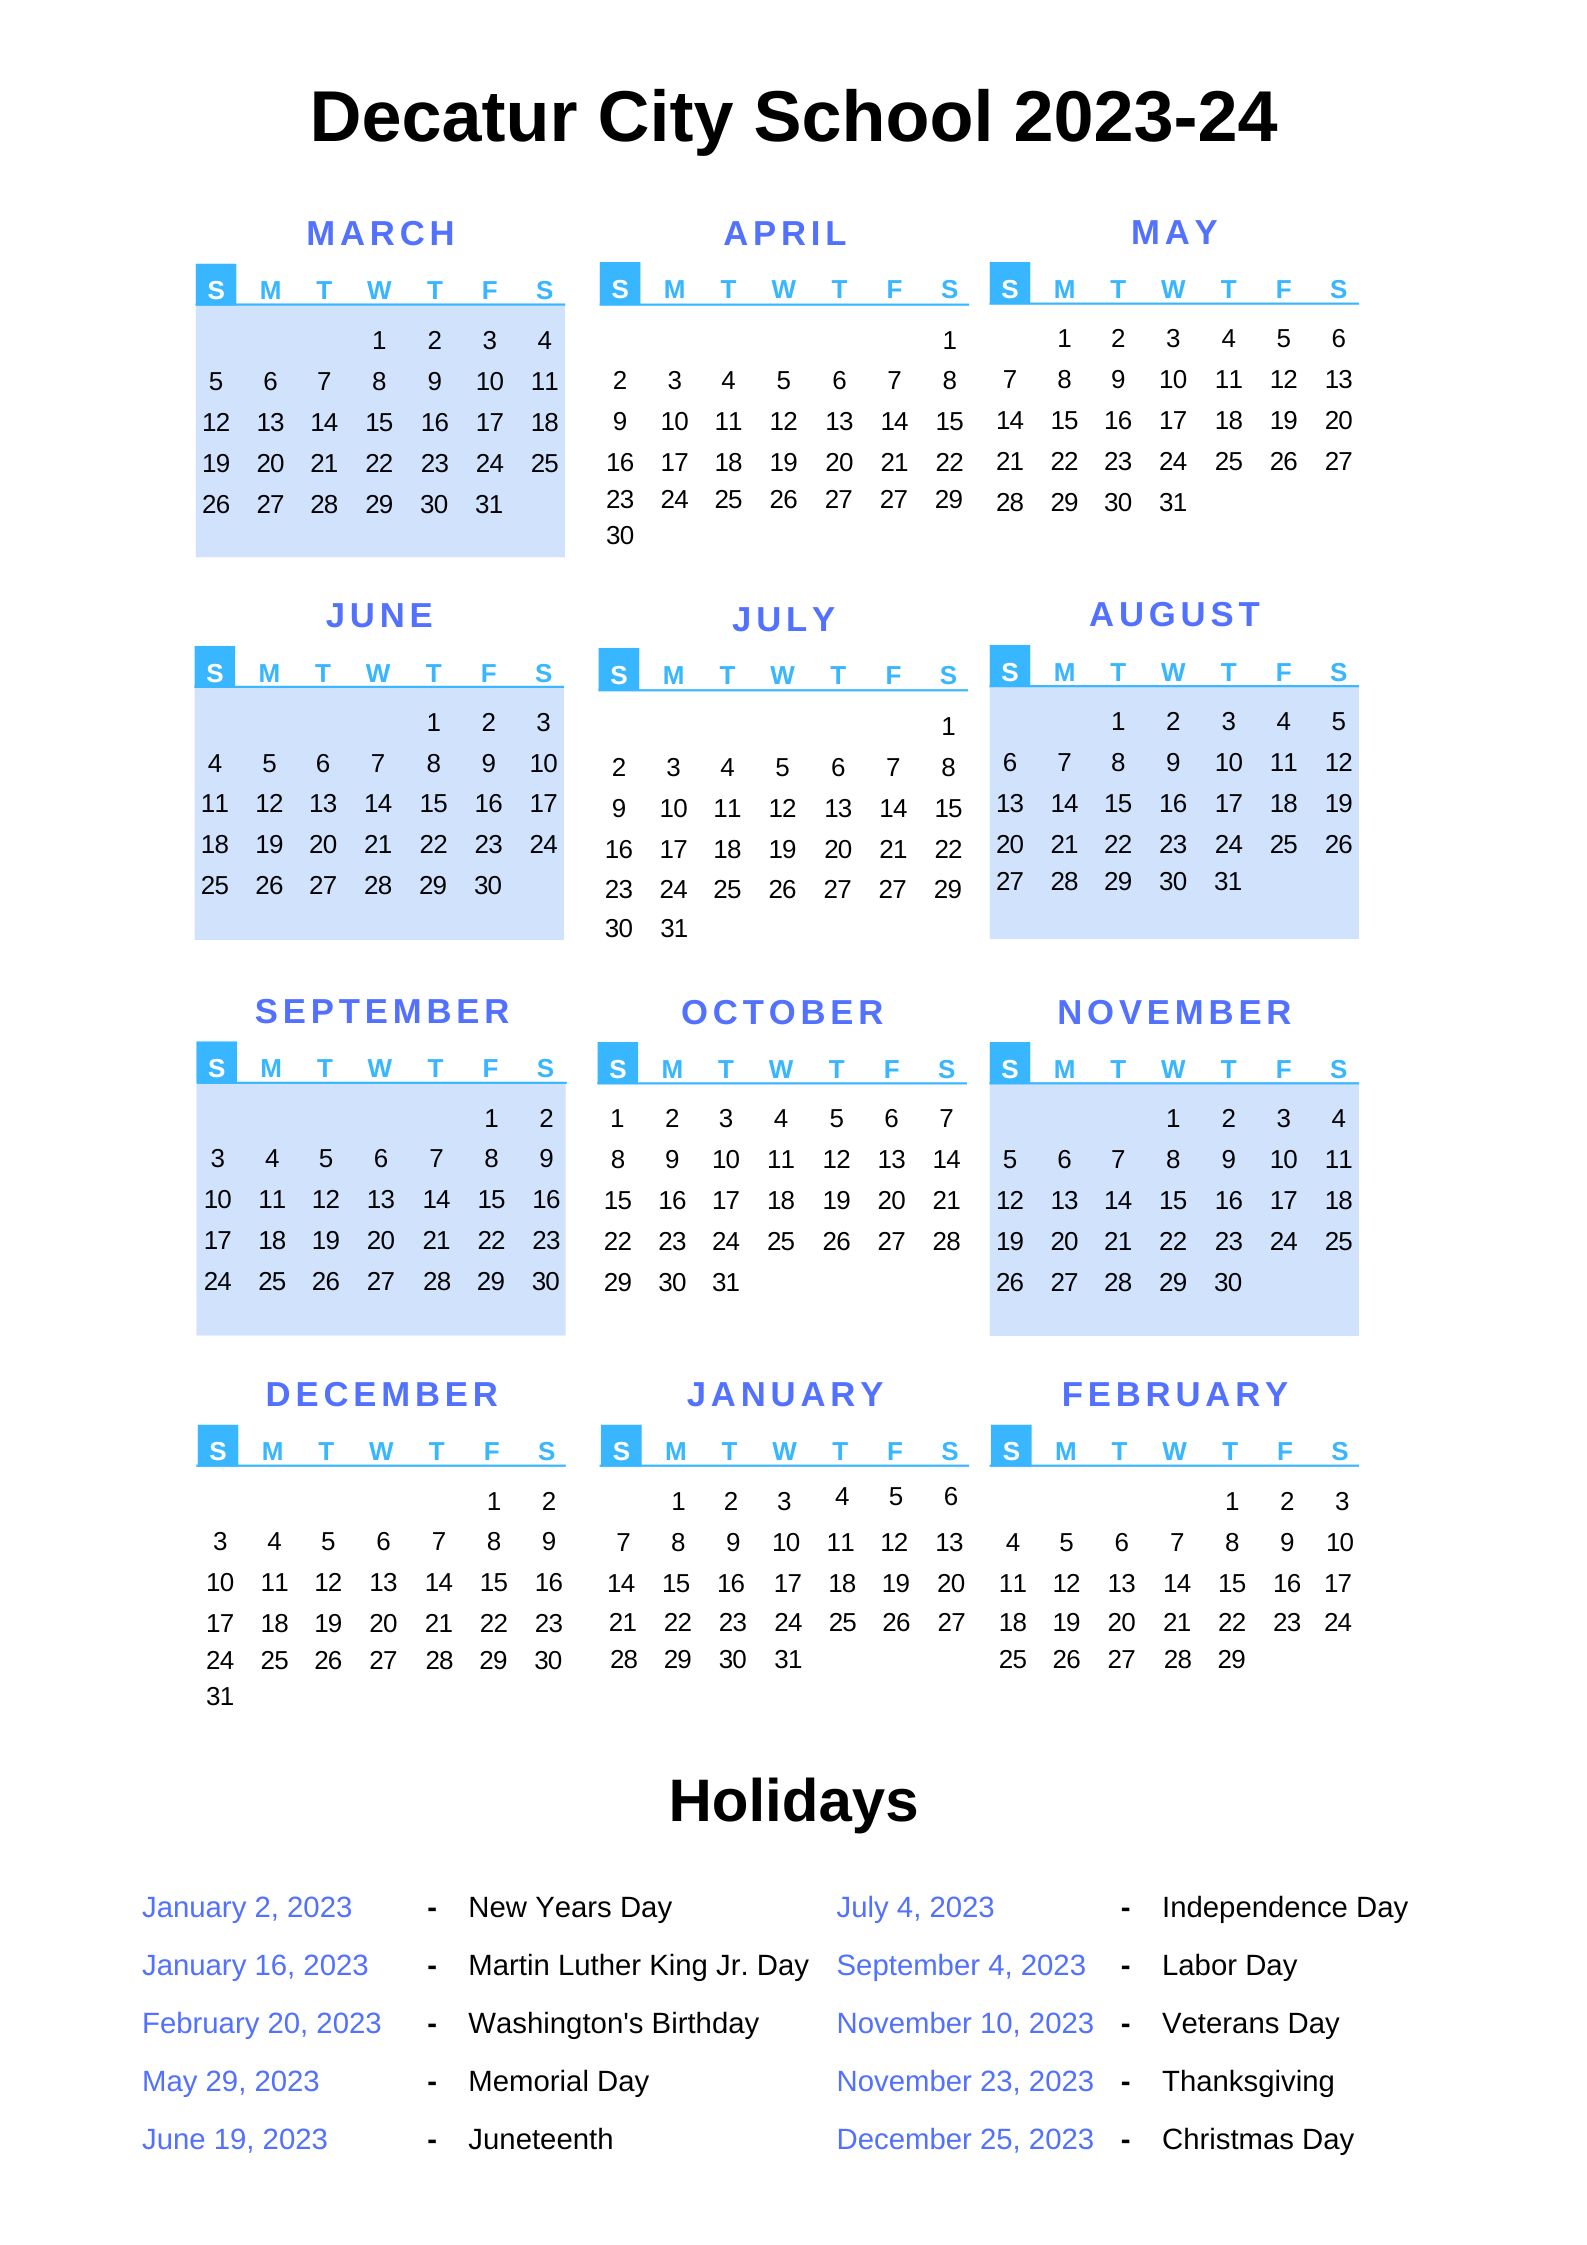 Decatur City Schools Calendar 2023-24 With Holidays